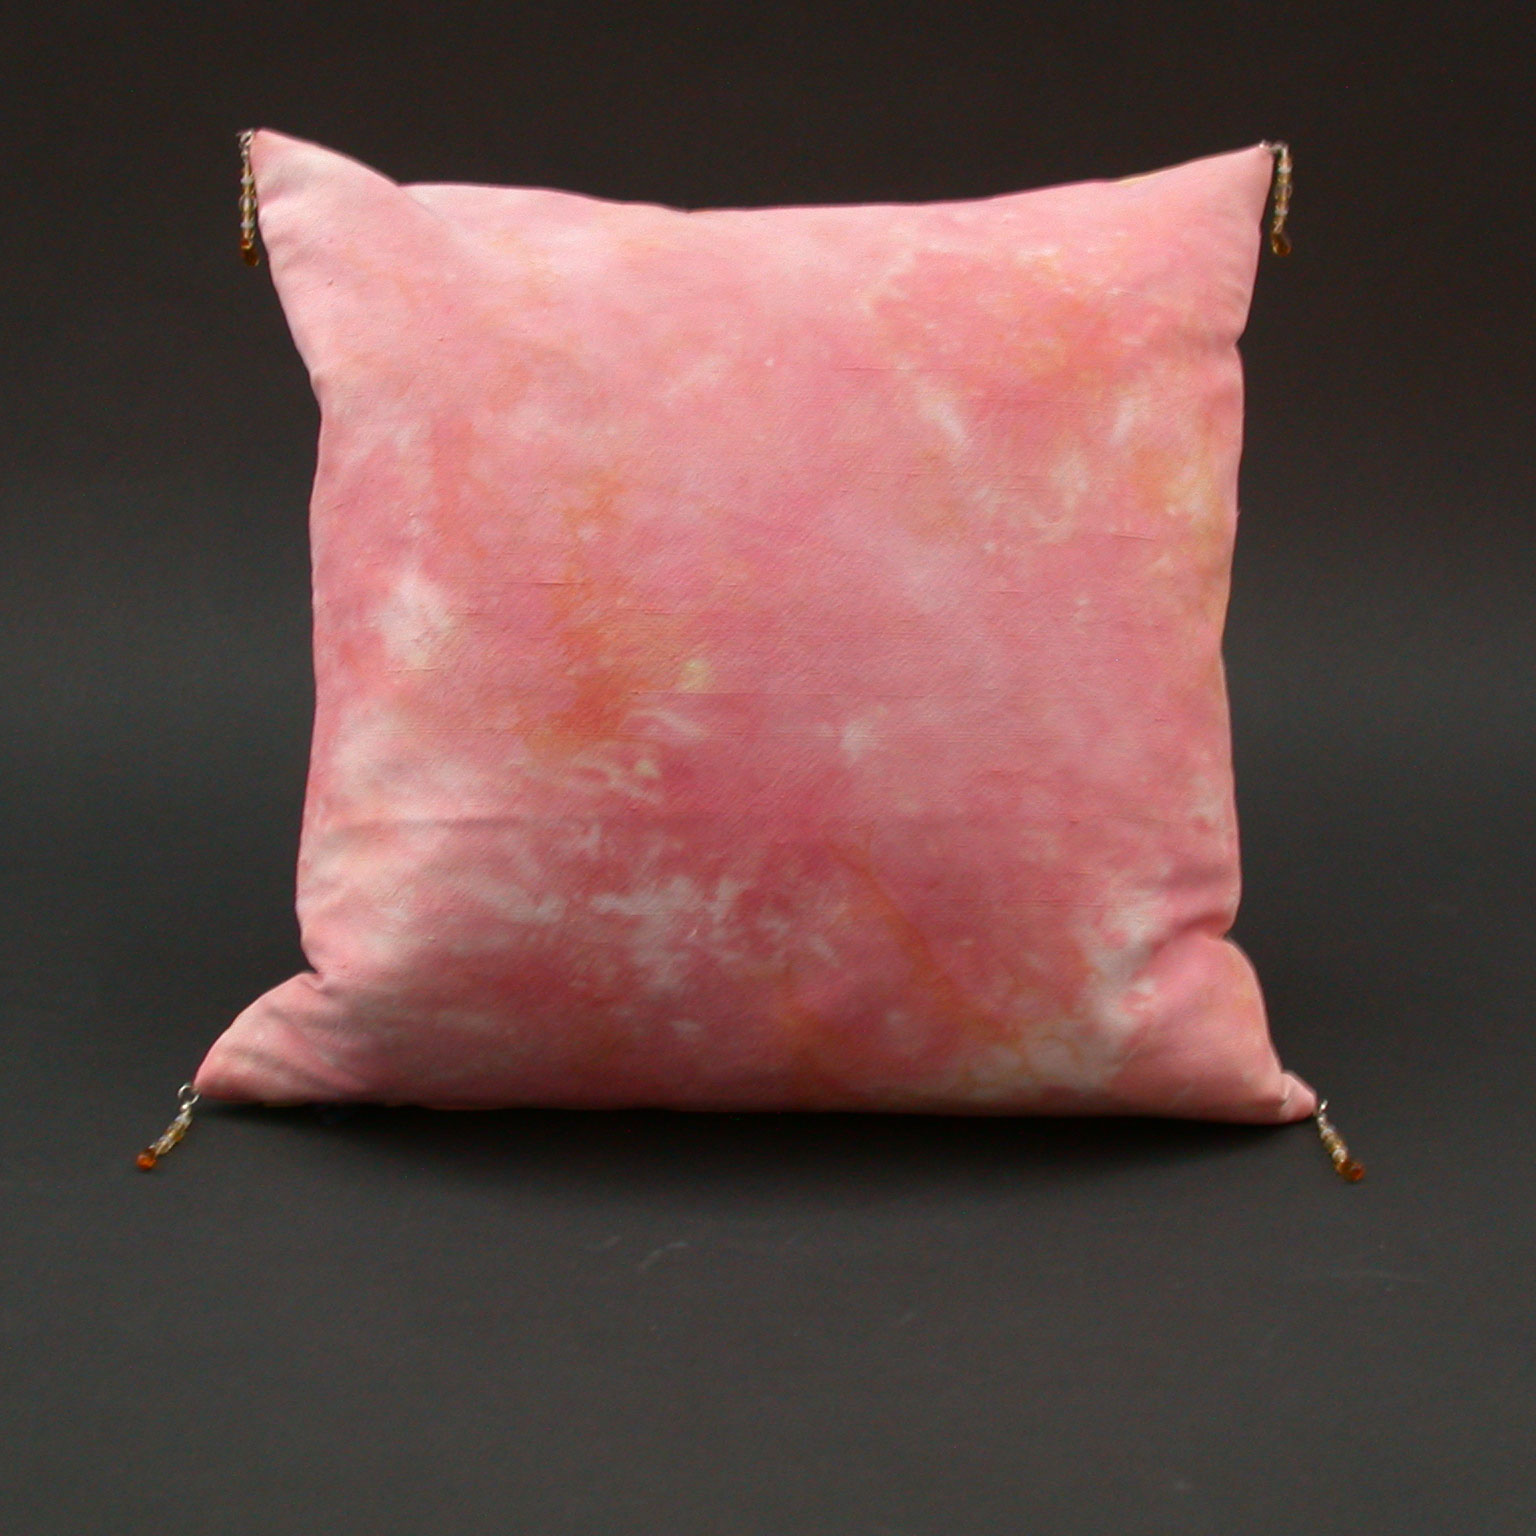 Karen Burton: Hand-Painted Dupioni Silk Pillow | Rendezvous Gallery